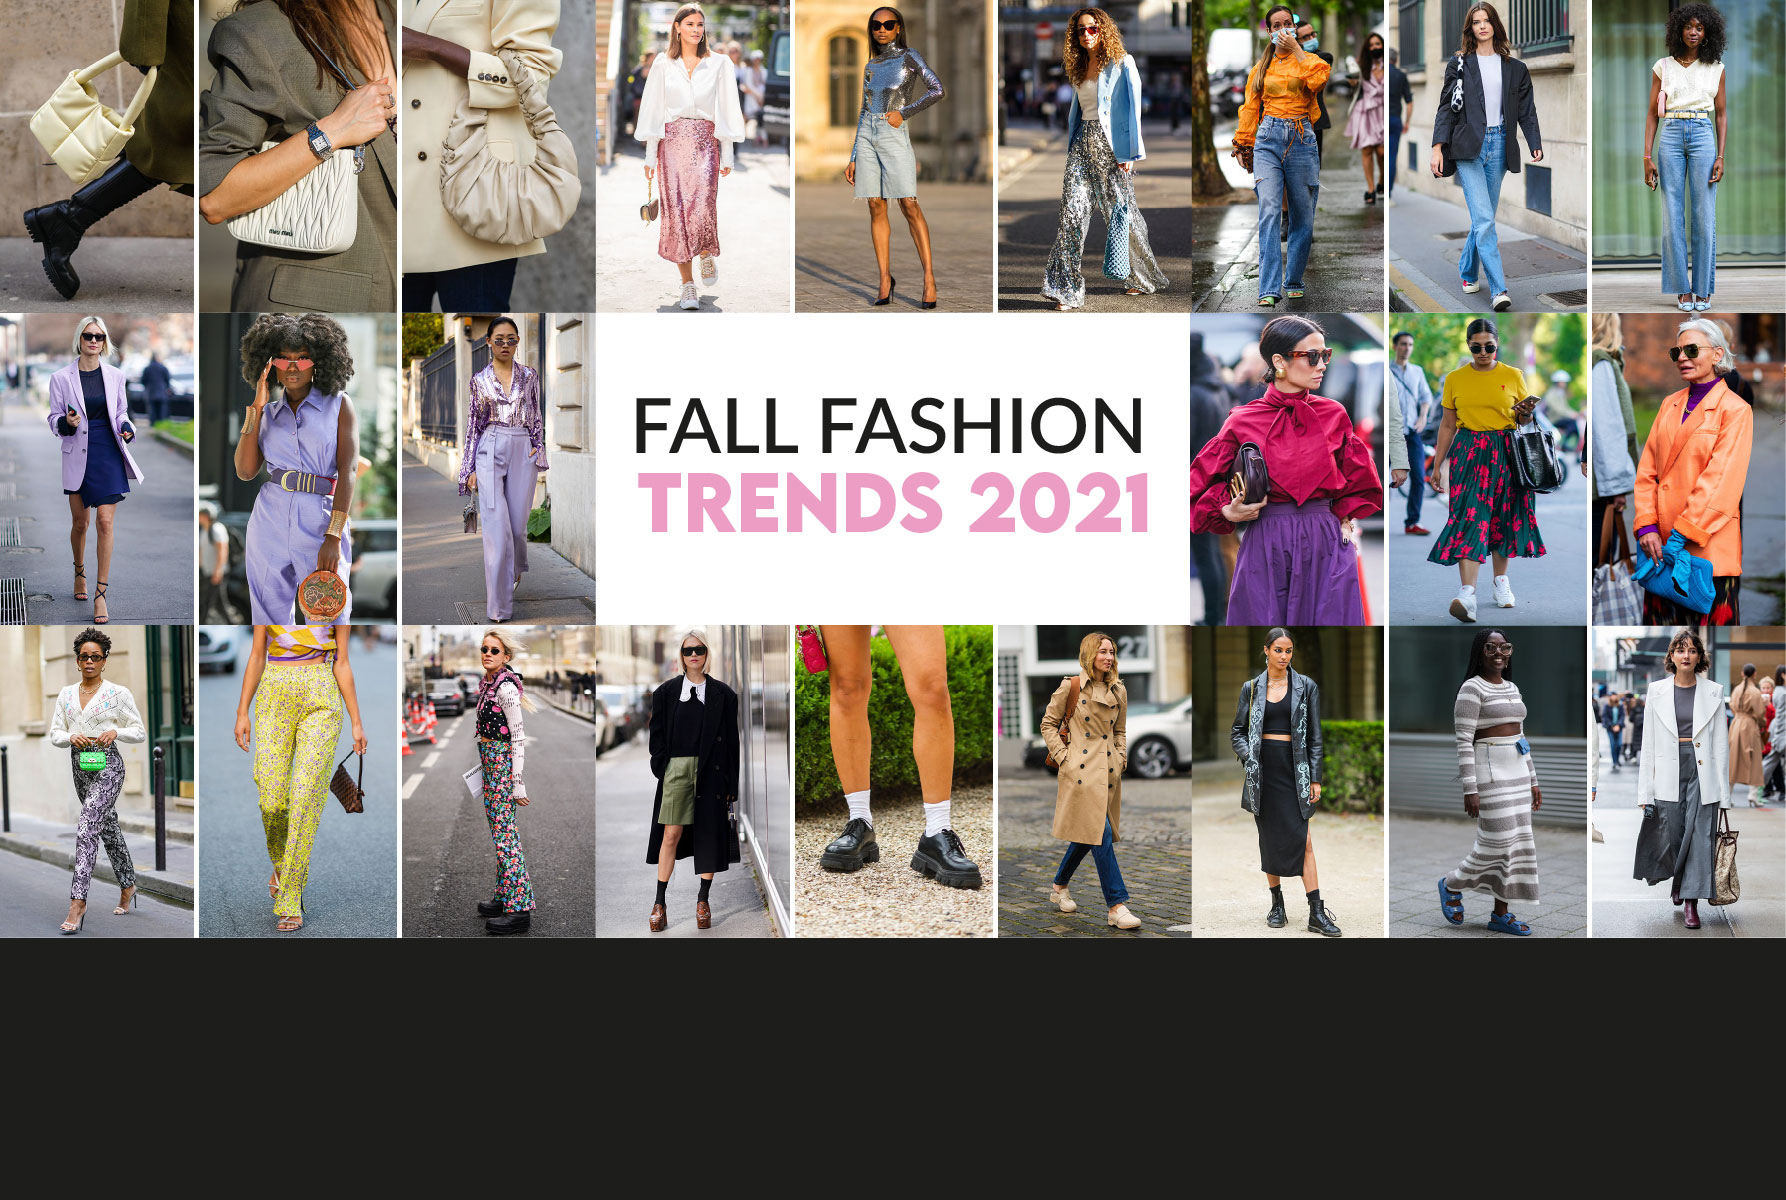 Fall Fashion Trends 2021